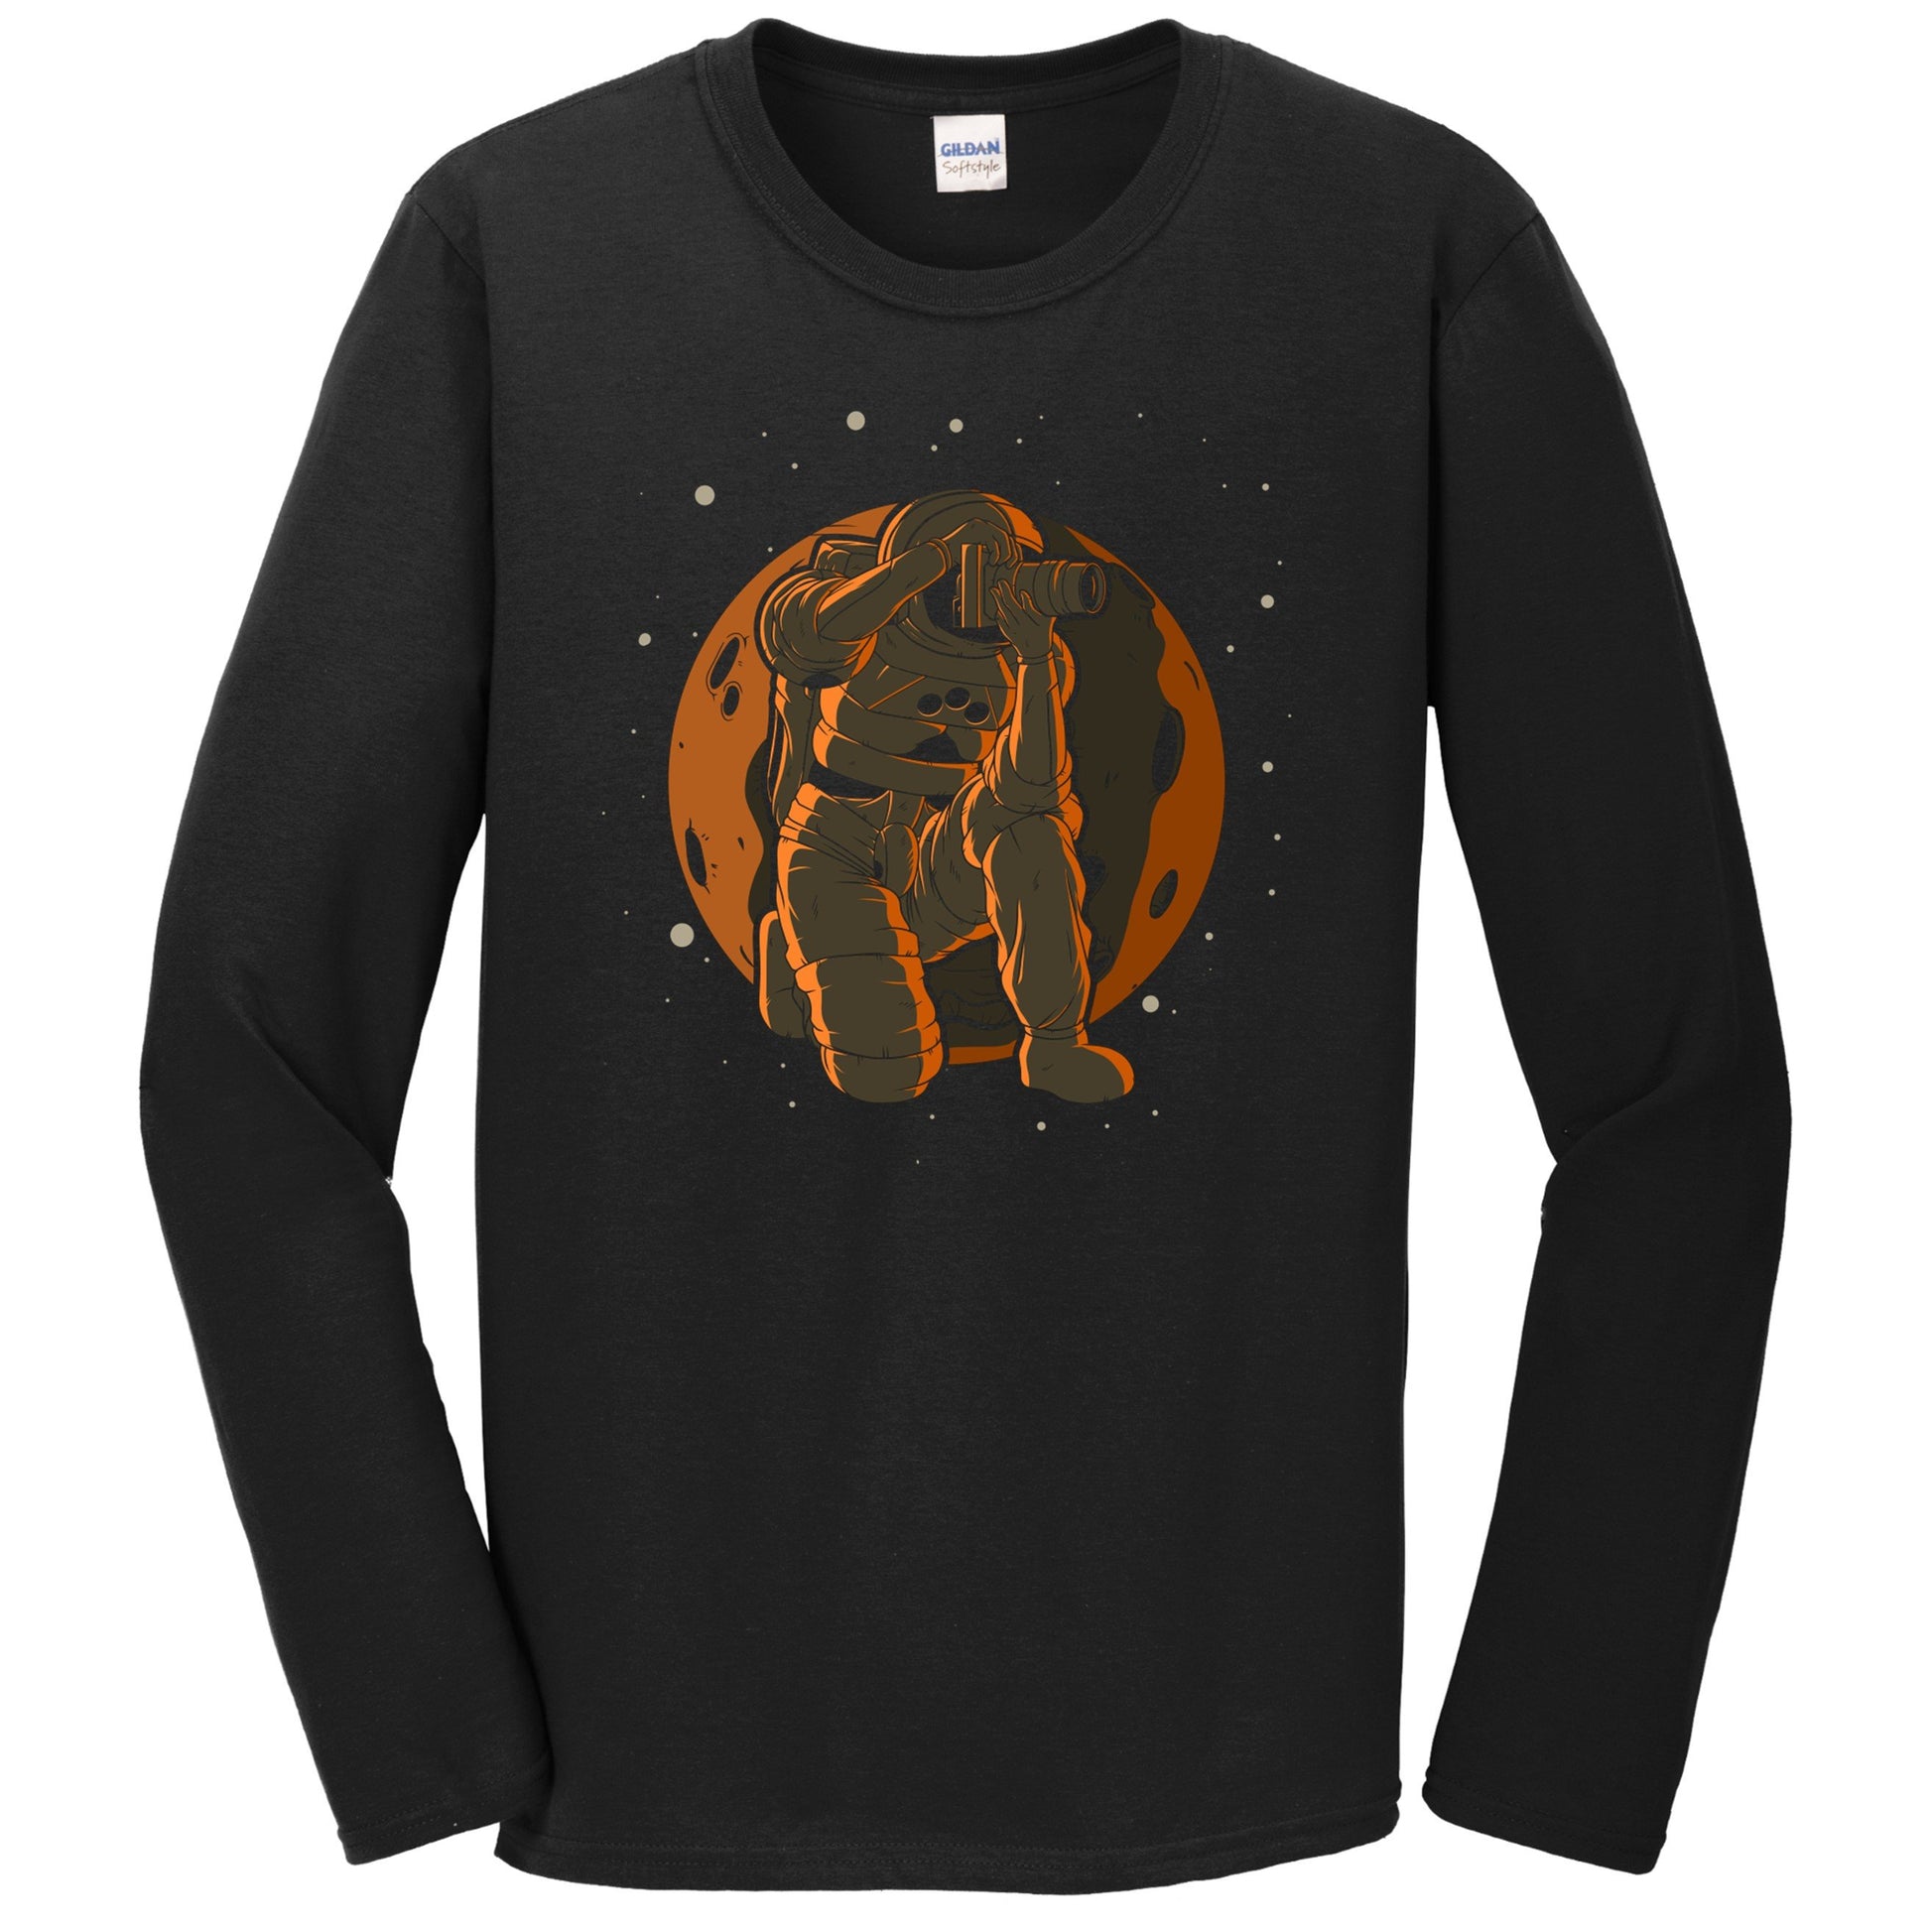 Photographer Astronaut Outer Space Spaceman Photography Long Sleeve T-Shirt - Men's Astronaut Shirt